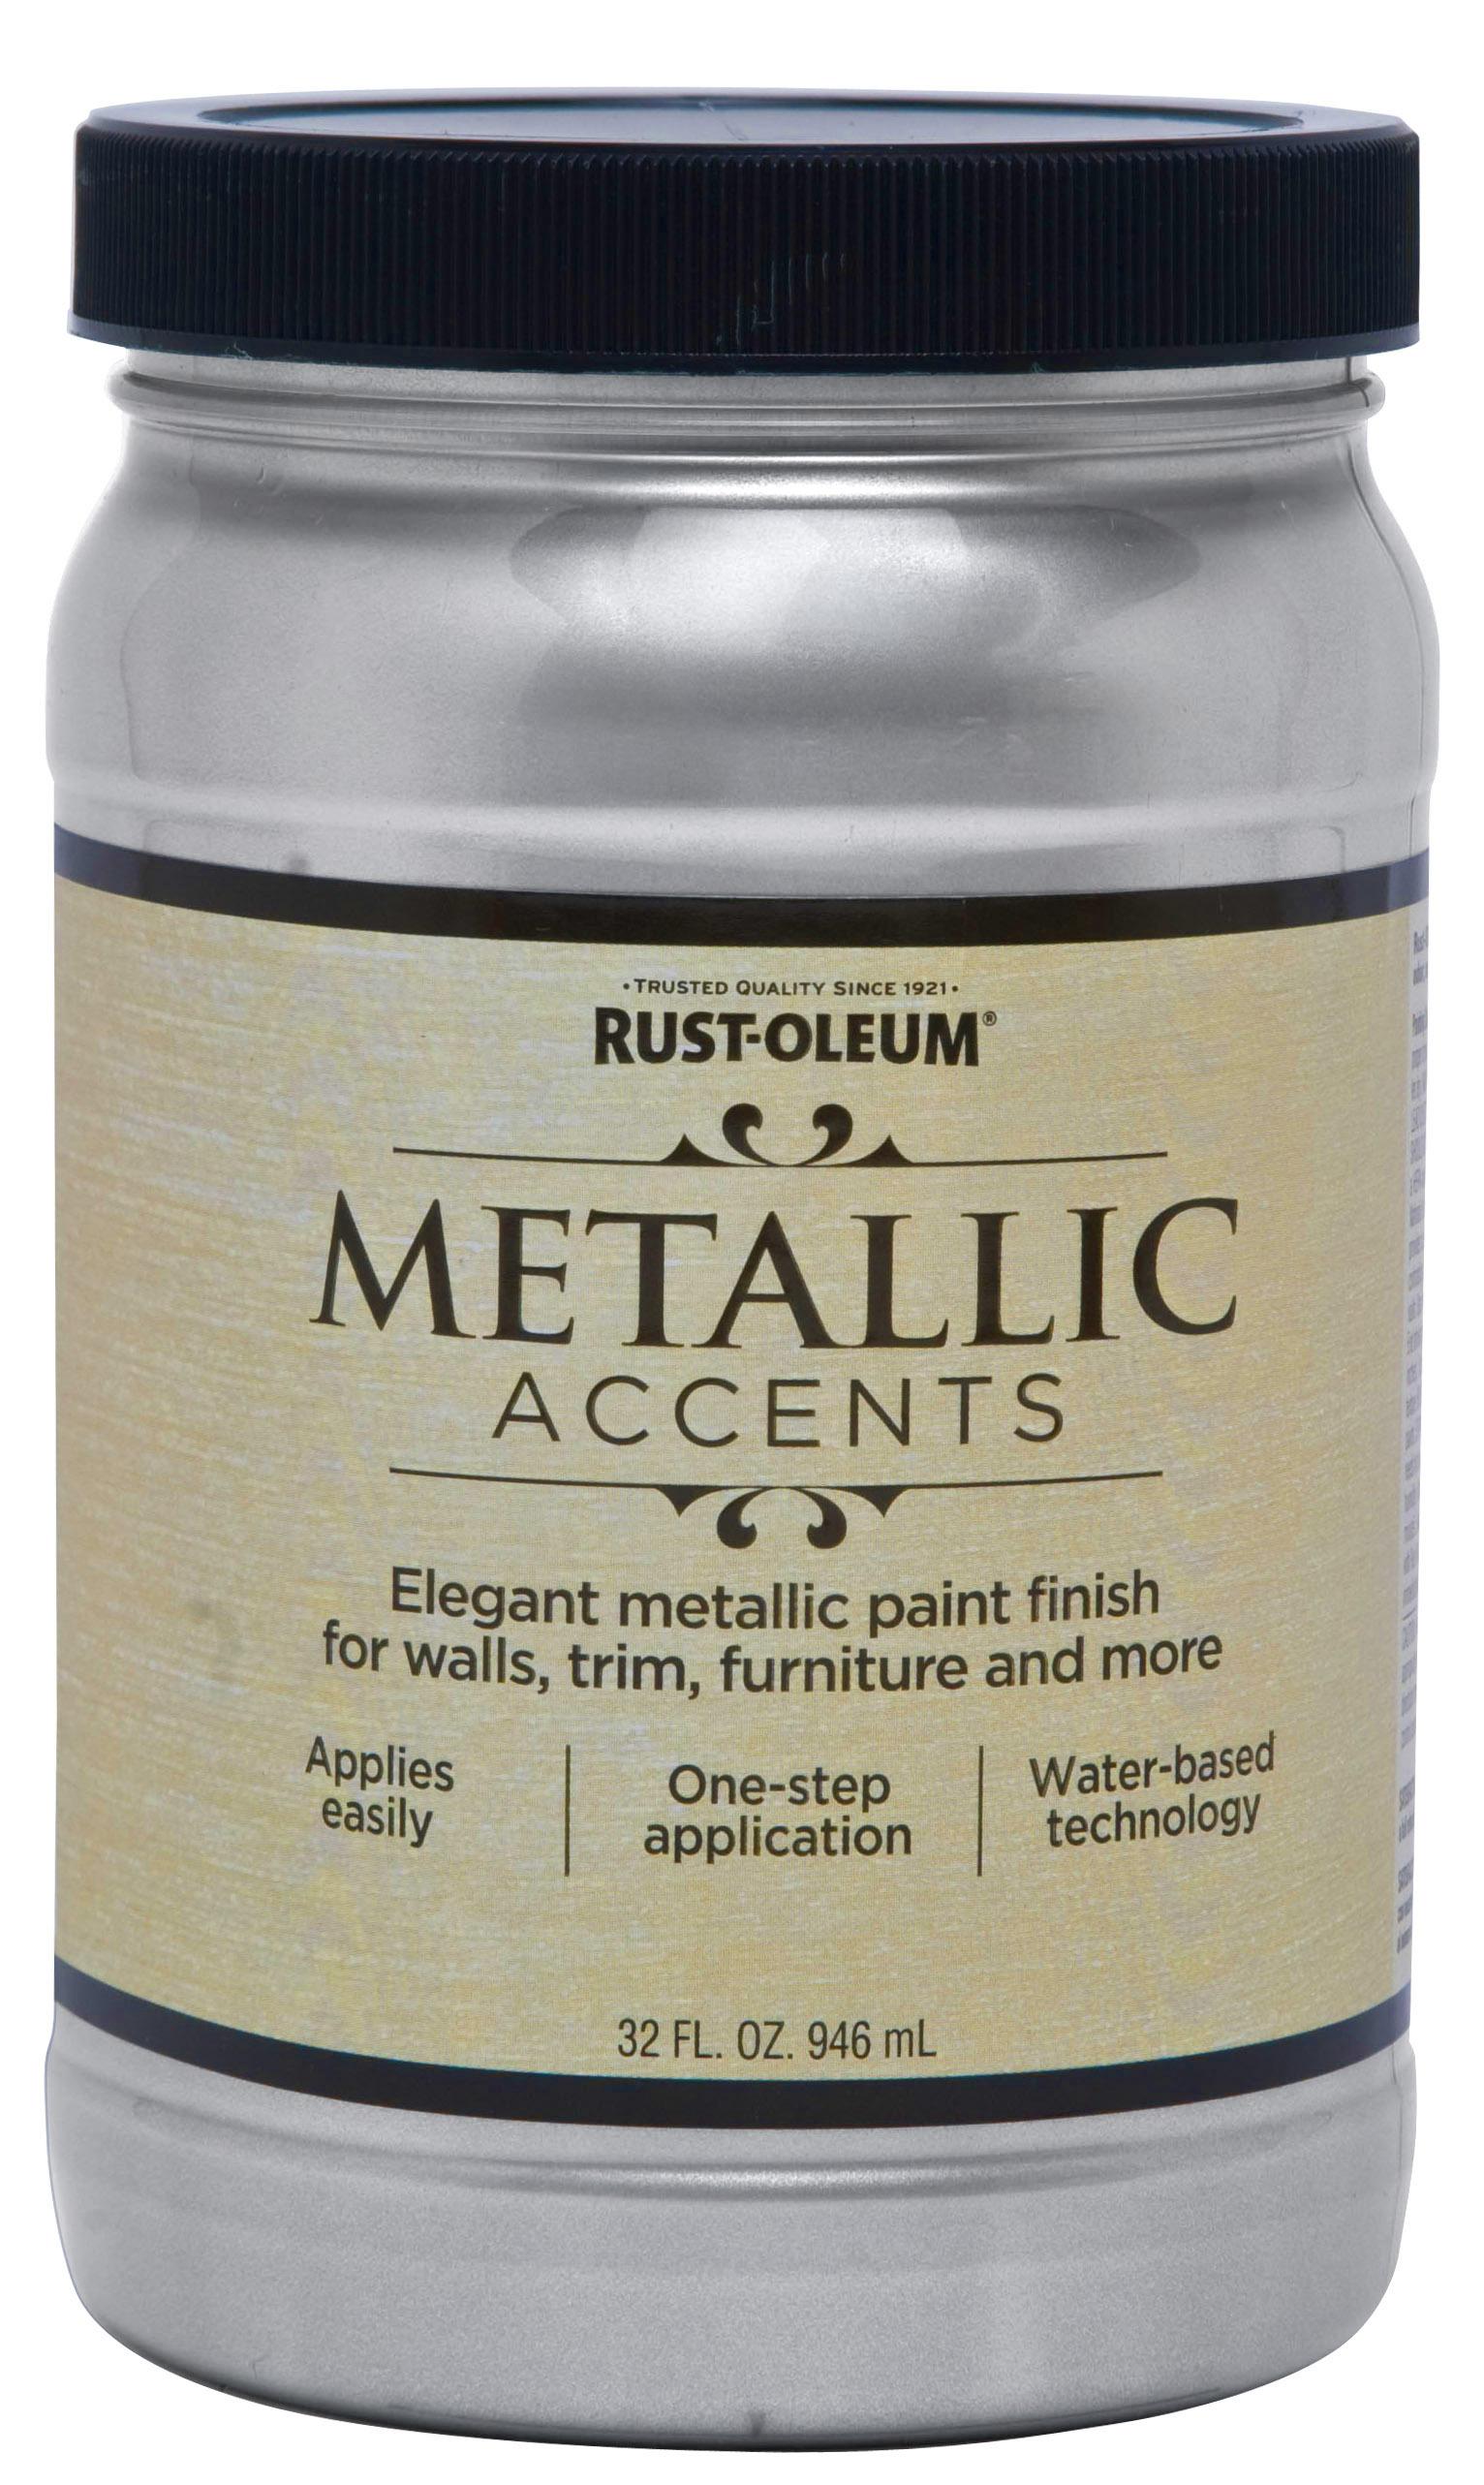 Rust-Oleum Glitter Satin Copper Glitter Latex Interior Paint (1-quart) | 360222SOS